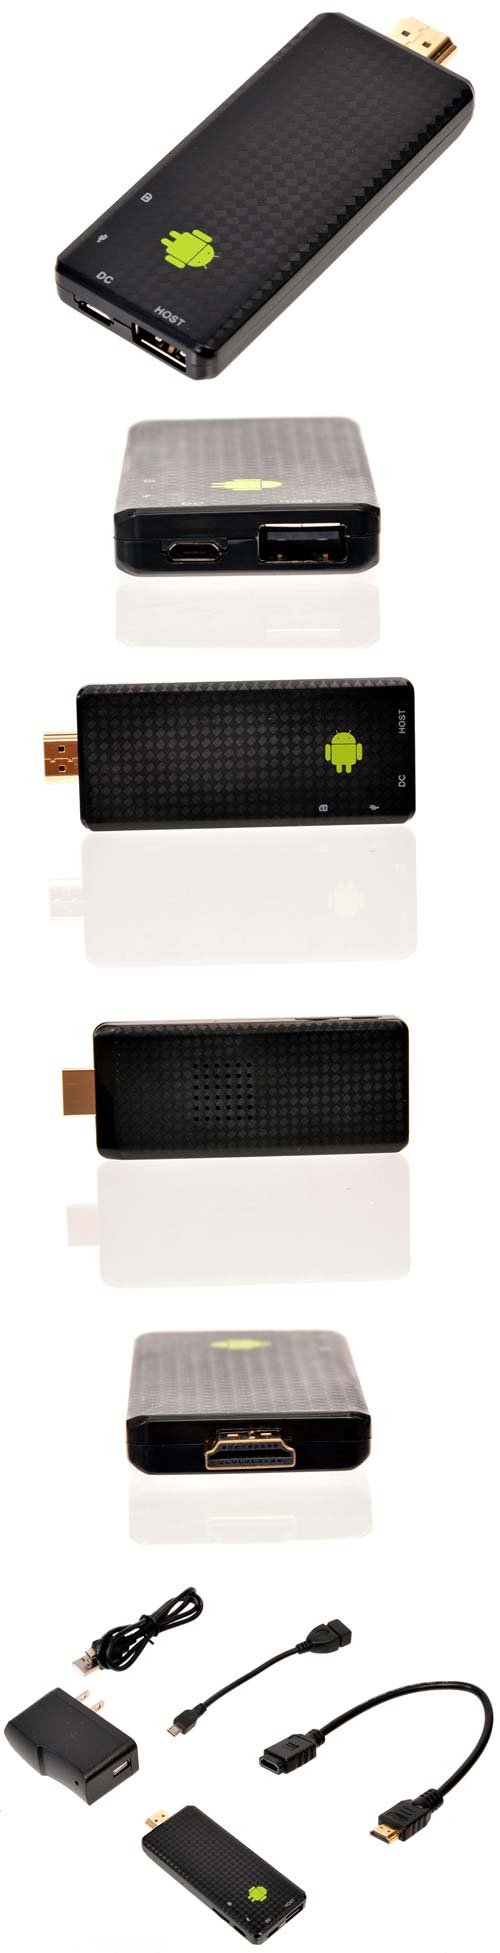 Android SmartTV Quad-core 2 от Thanko